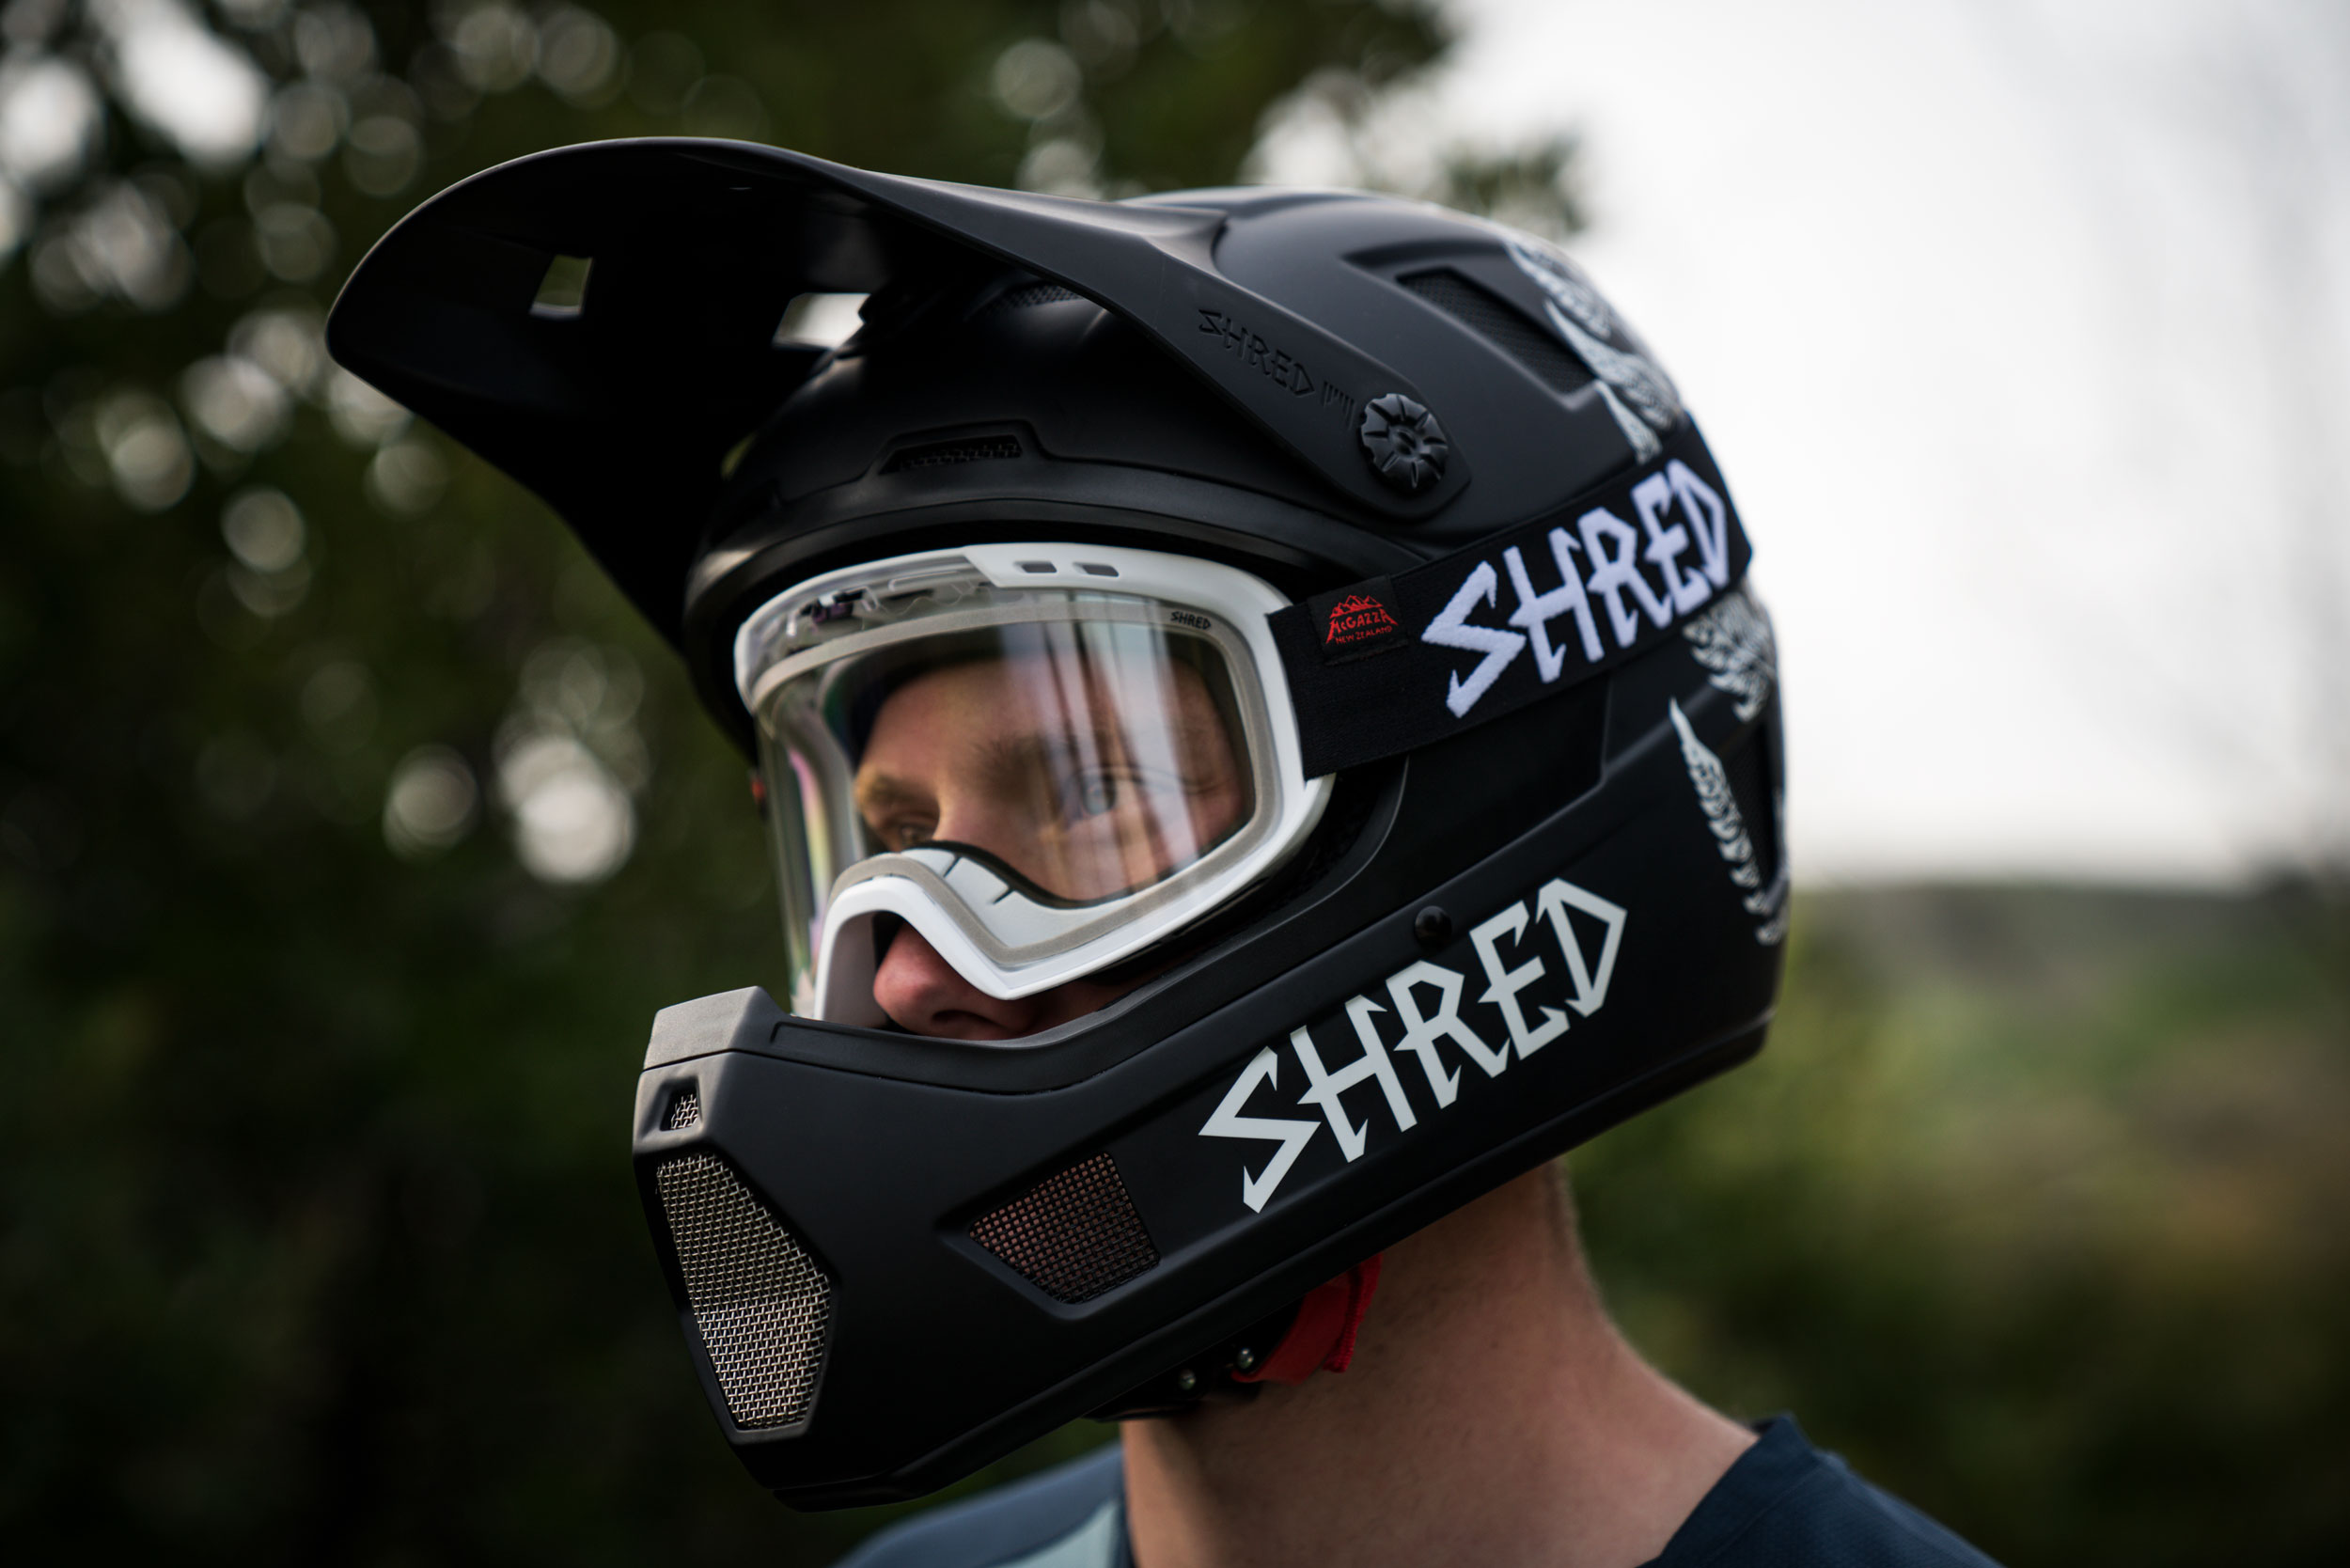 Review: Shred Brain Box Helmet